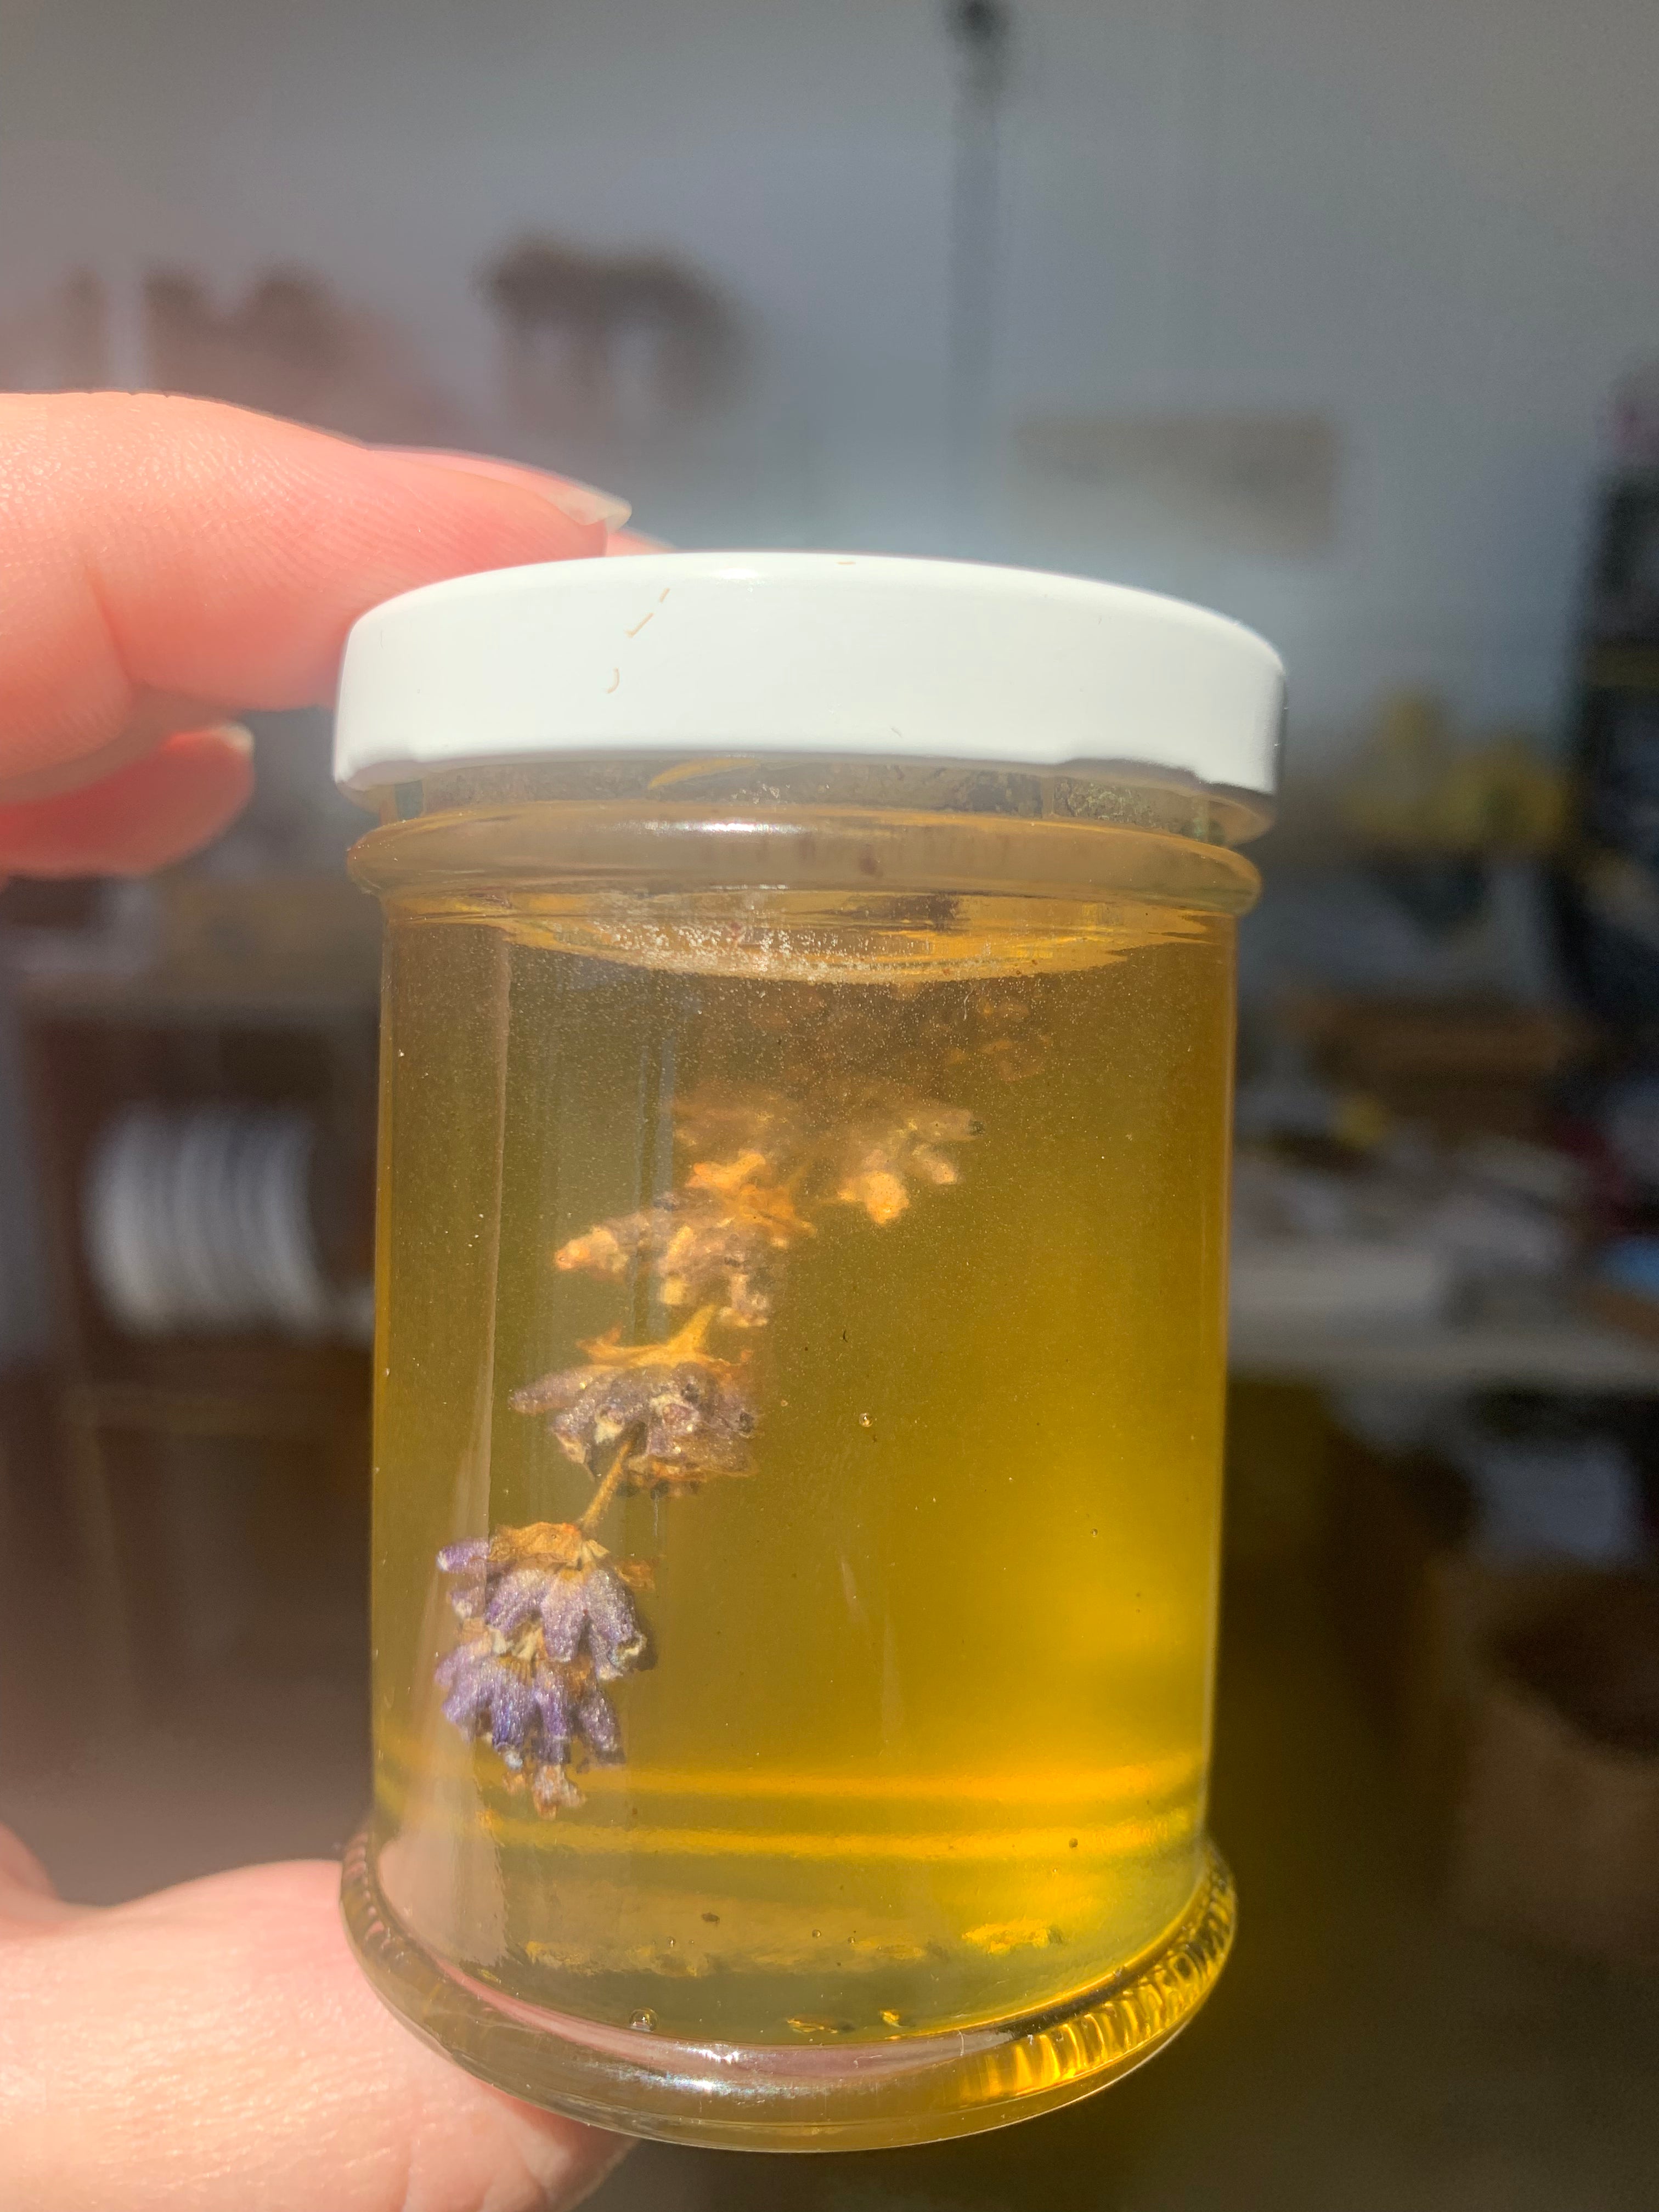 Lavender infused honey